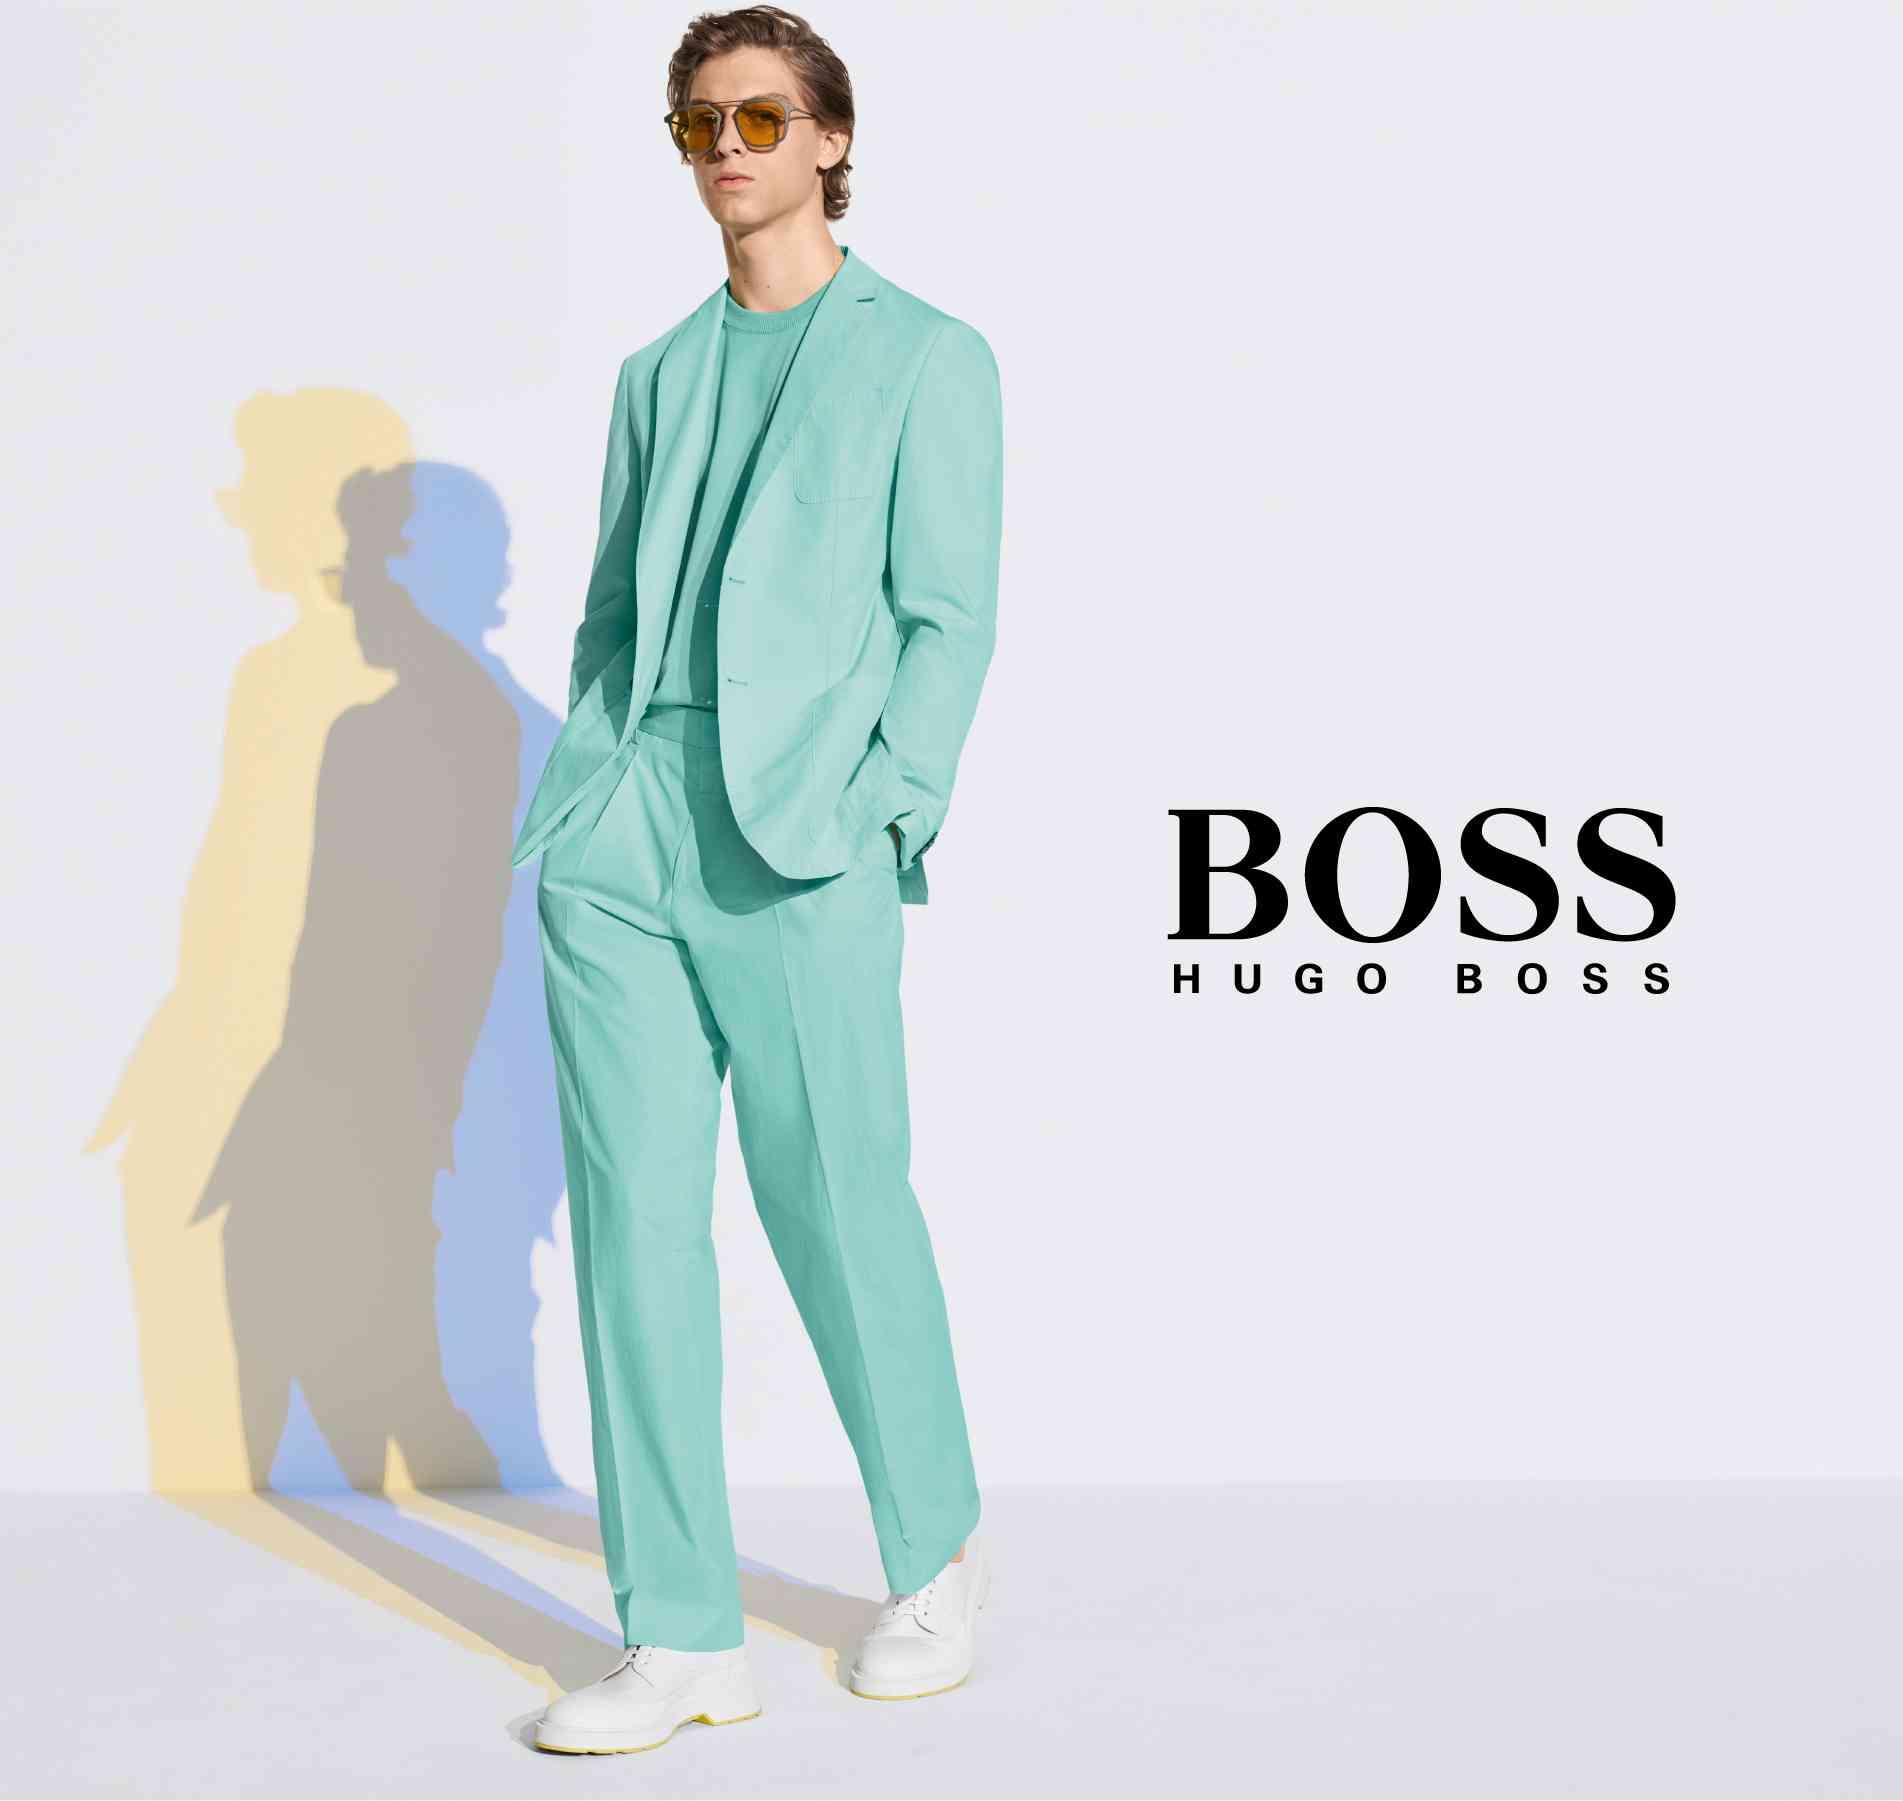 man in green suit next to hugo boss logo